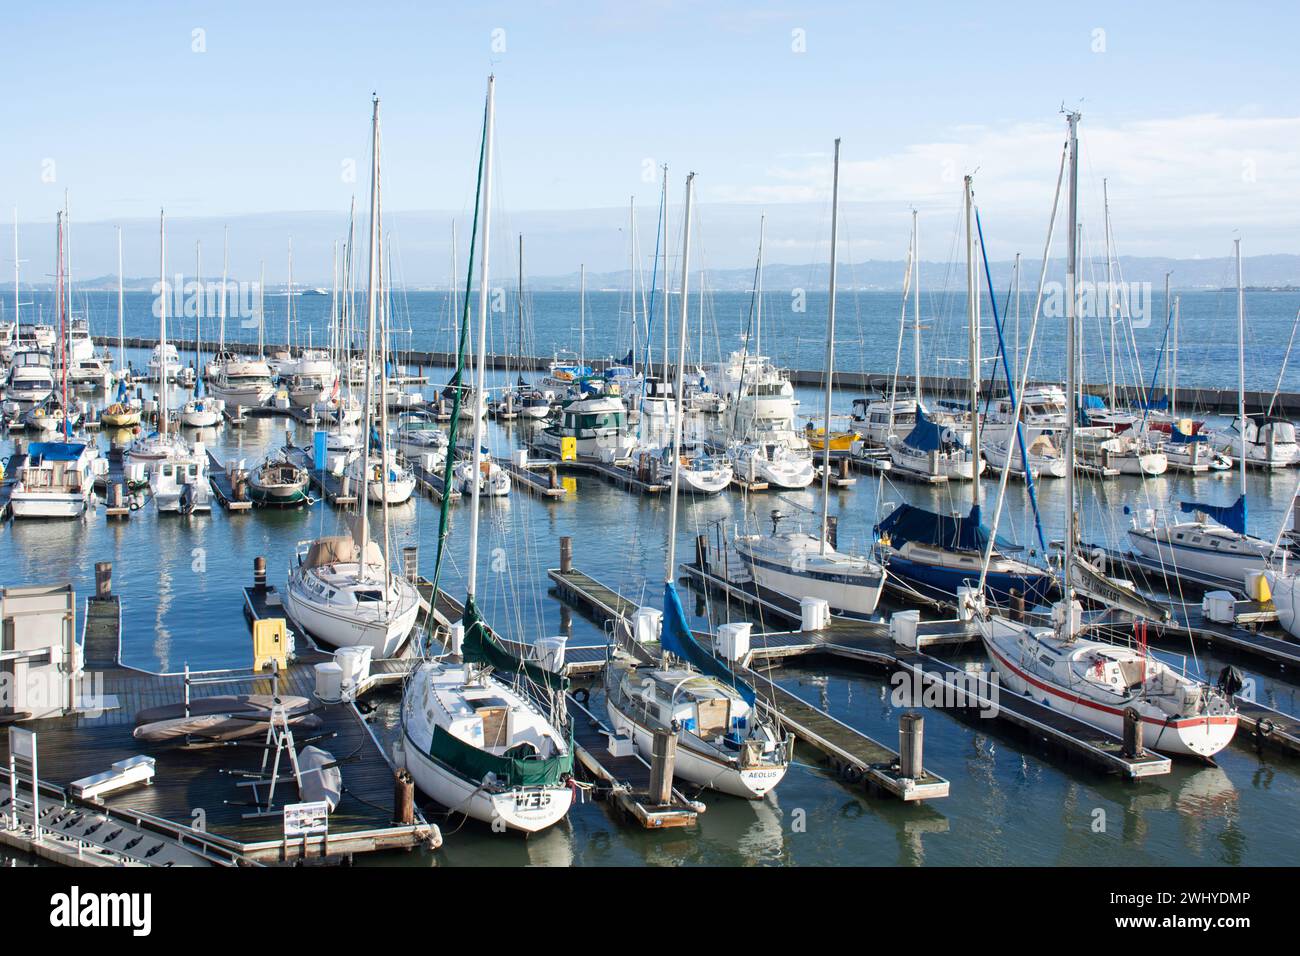 Boat marina at Pier 39, Fisherman's Wharf District, San Francisco, California, United States Stock Photo